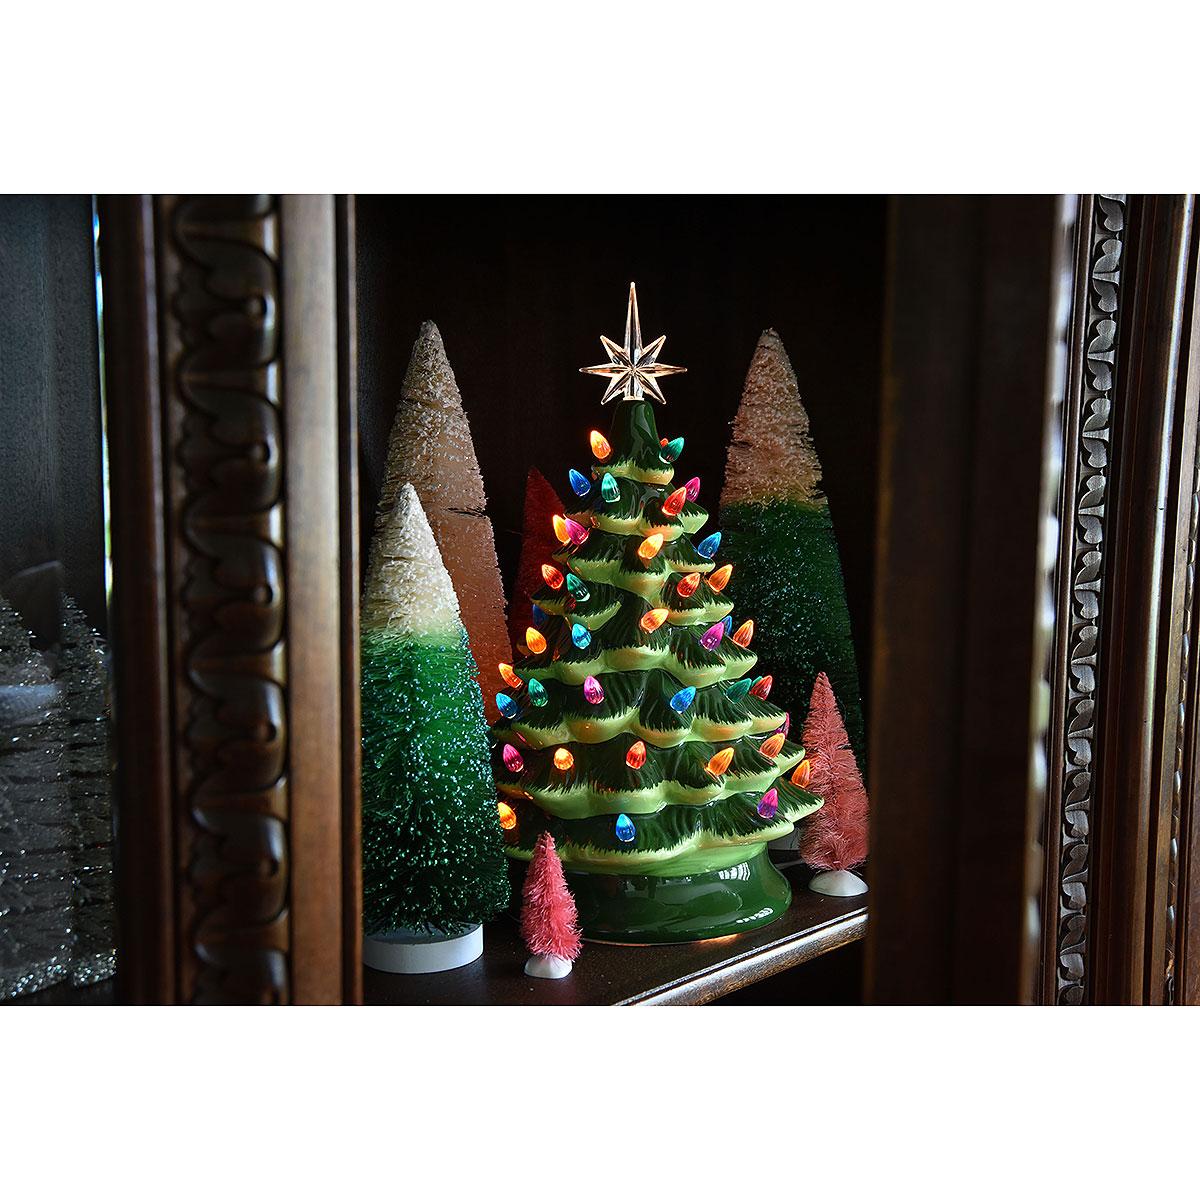 Ceramic Christmas Tree With Lights Vignette